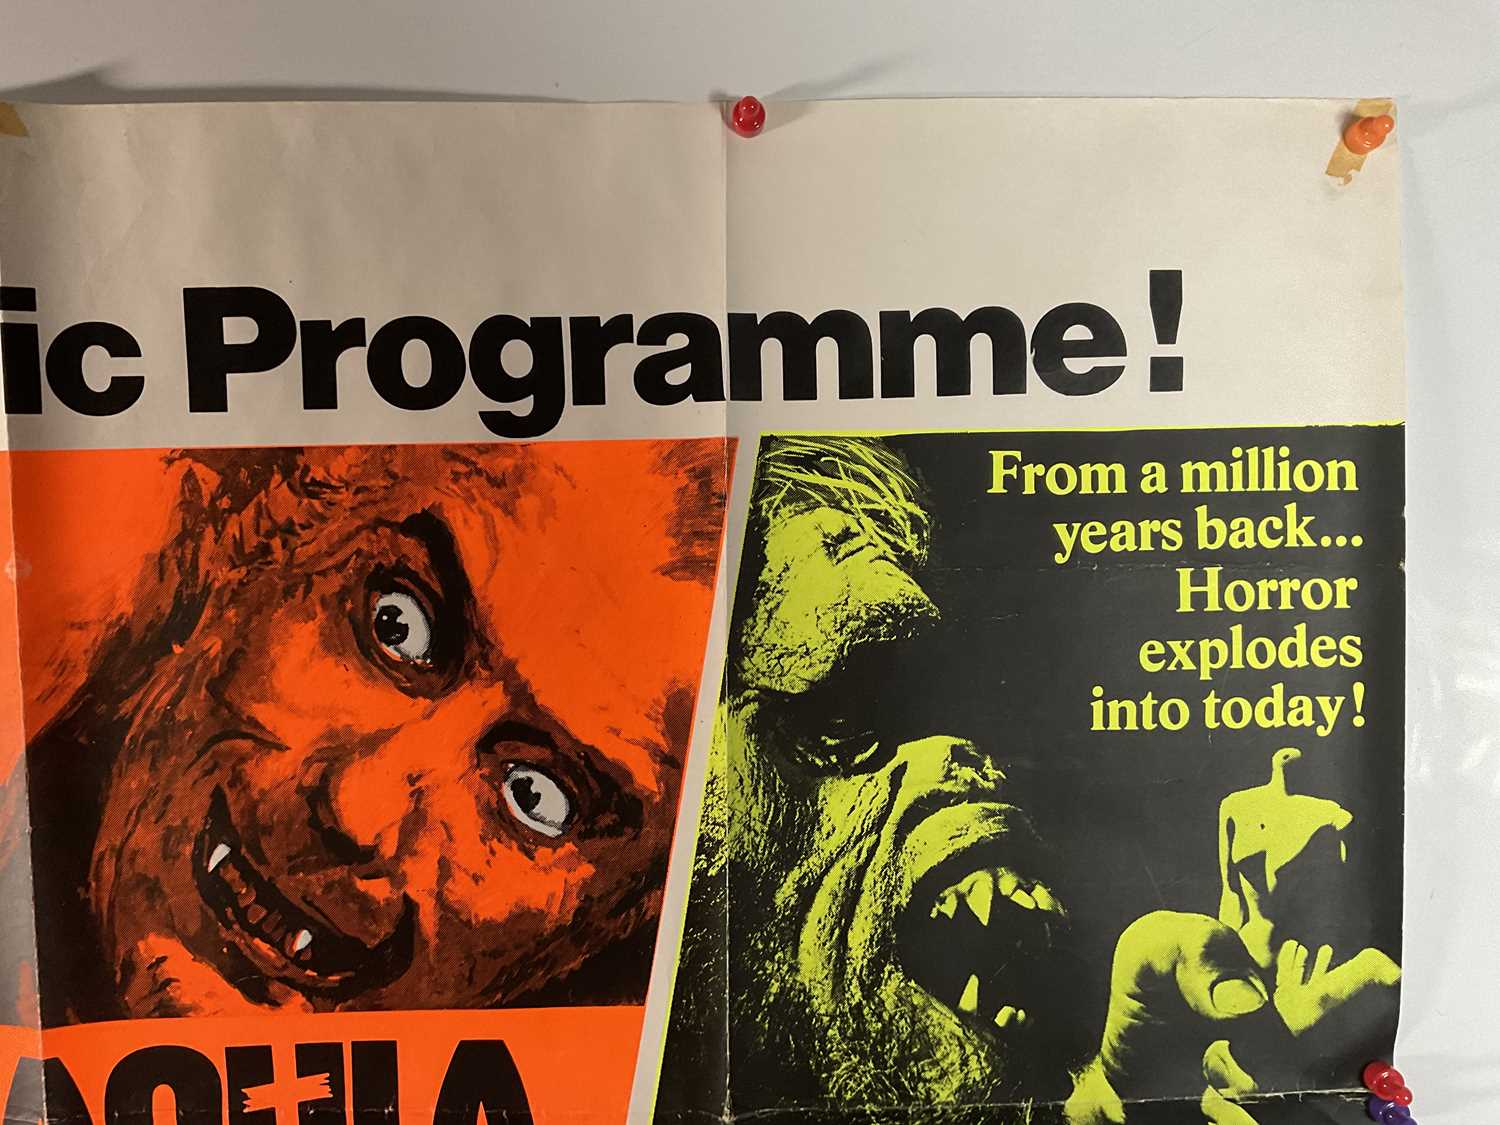 DRACULA A.D. 1972 / TROG (1972) Double-Bill UK Quad film poster, Tom Chantrell artwork classic - Image 4 of 8